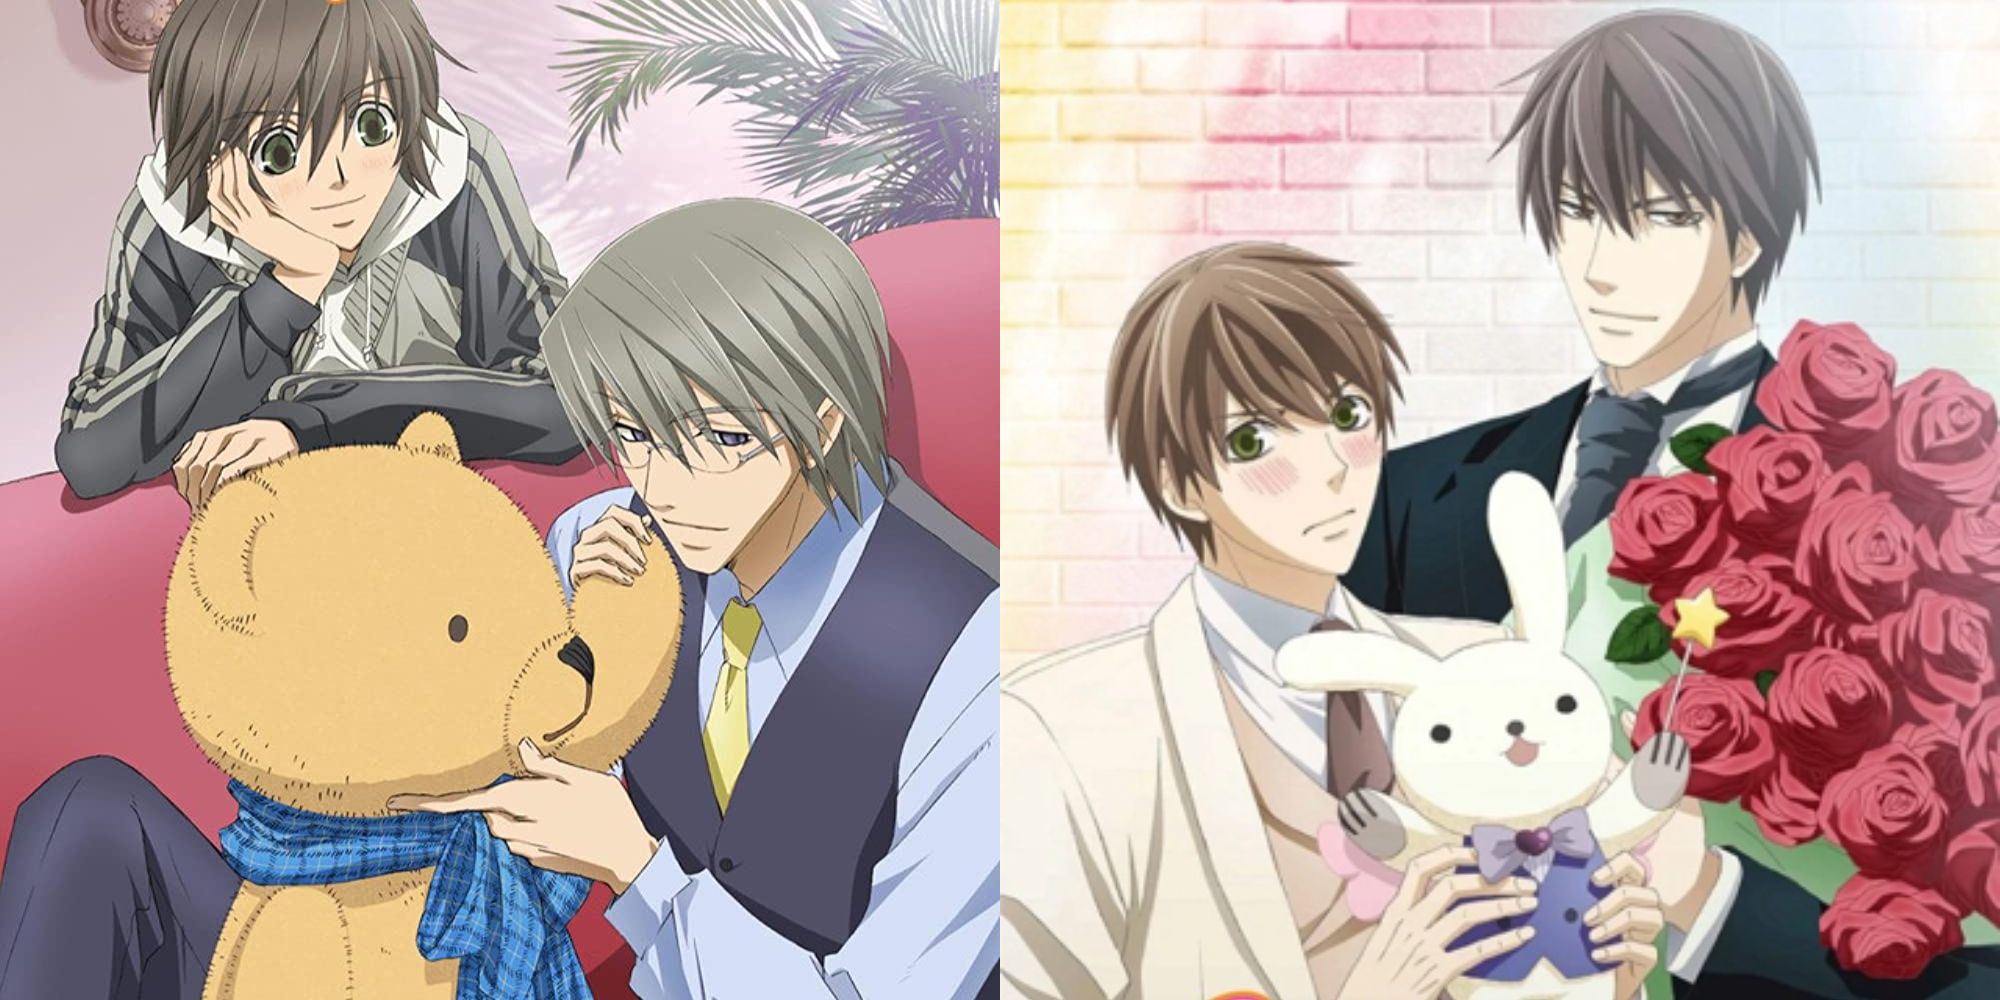 Split image showing characters from Junjou Romantica and Sekaiichi Hatsukoi.